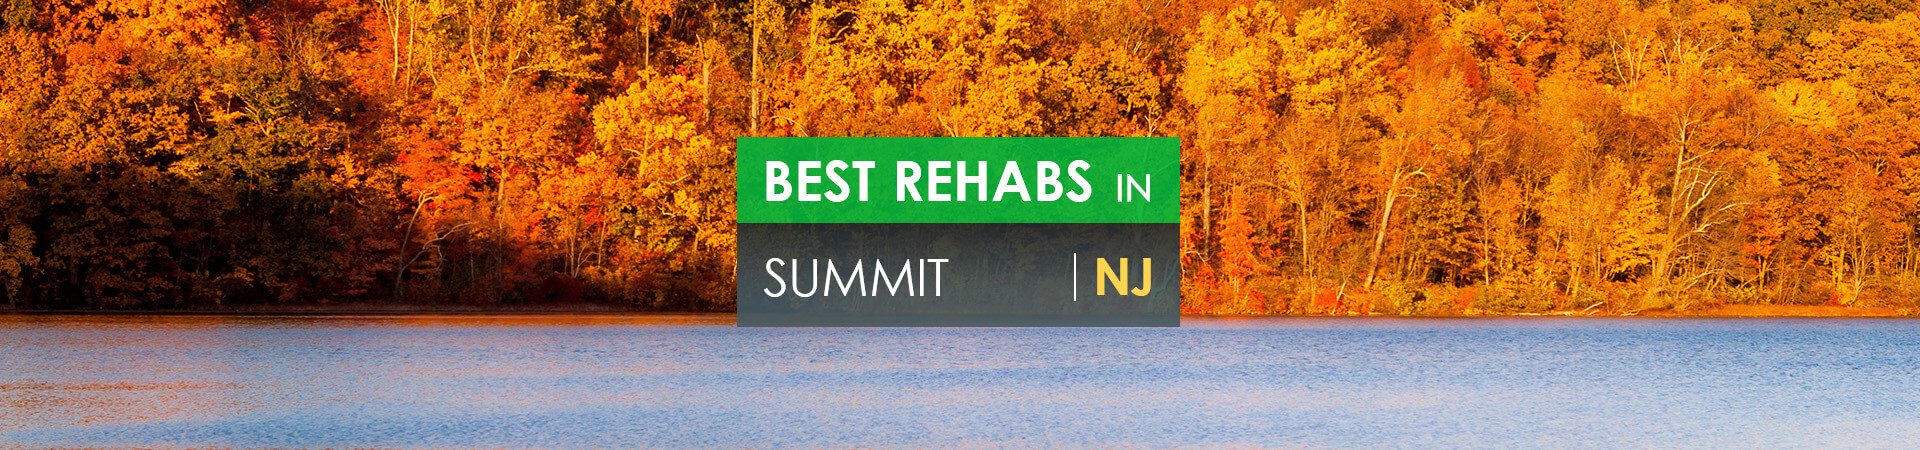 Best rehabs in Summit, NJ